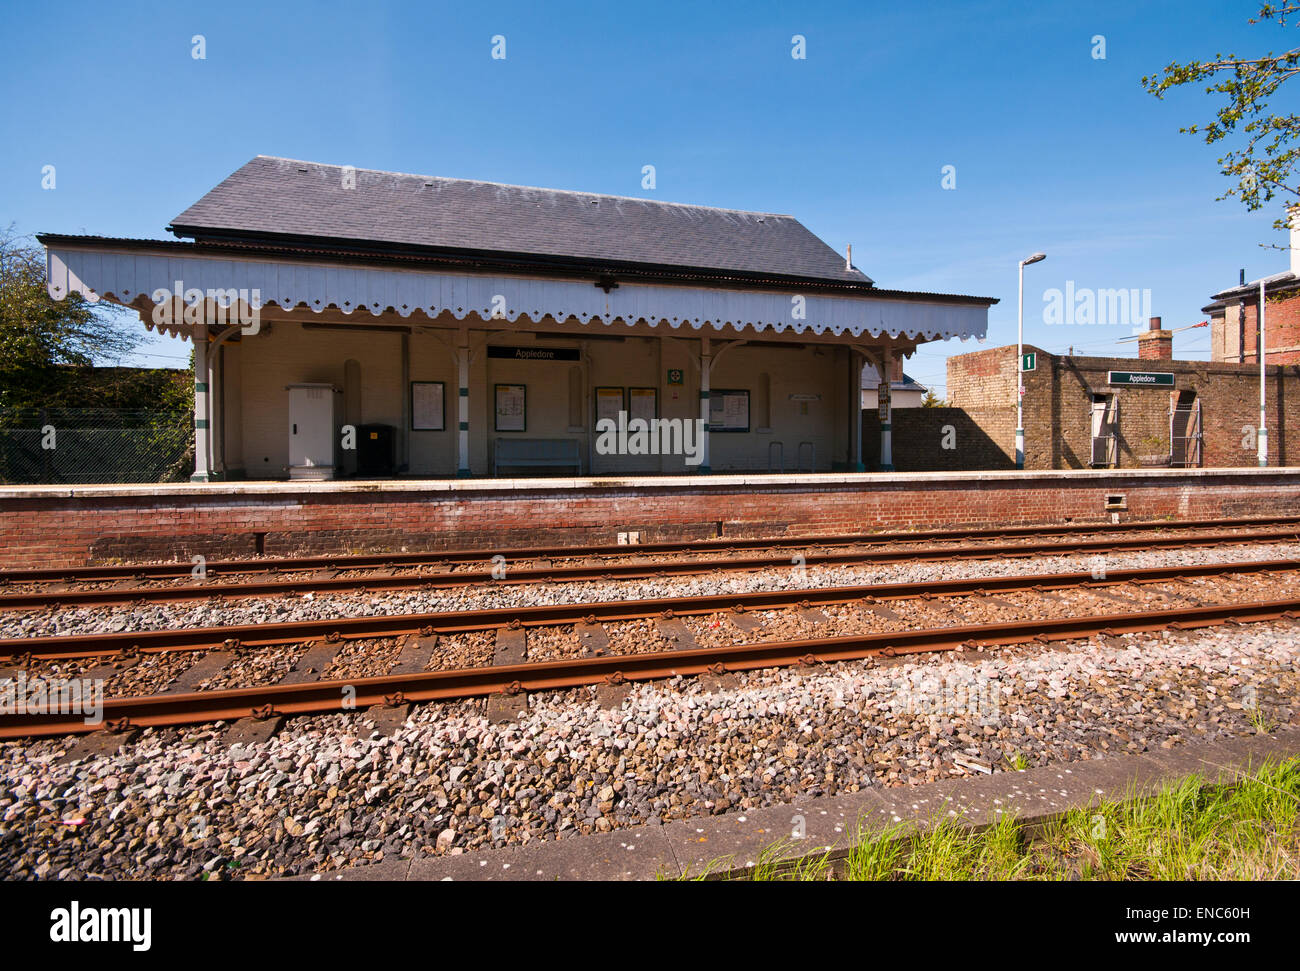 Leere ländlichen Bahnhof Bahnsteig bei Appledore Kent UK Stockfoto